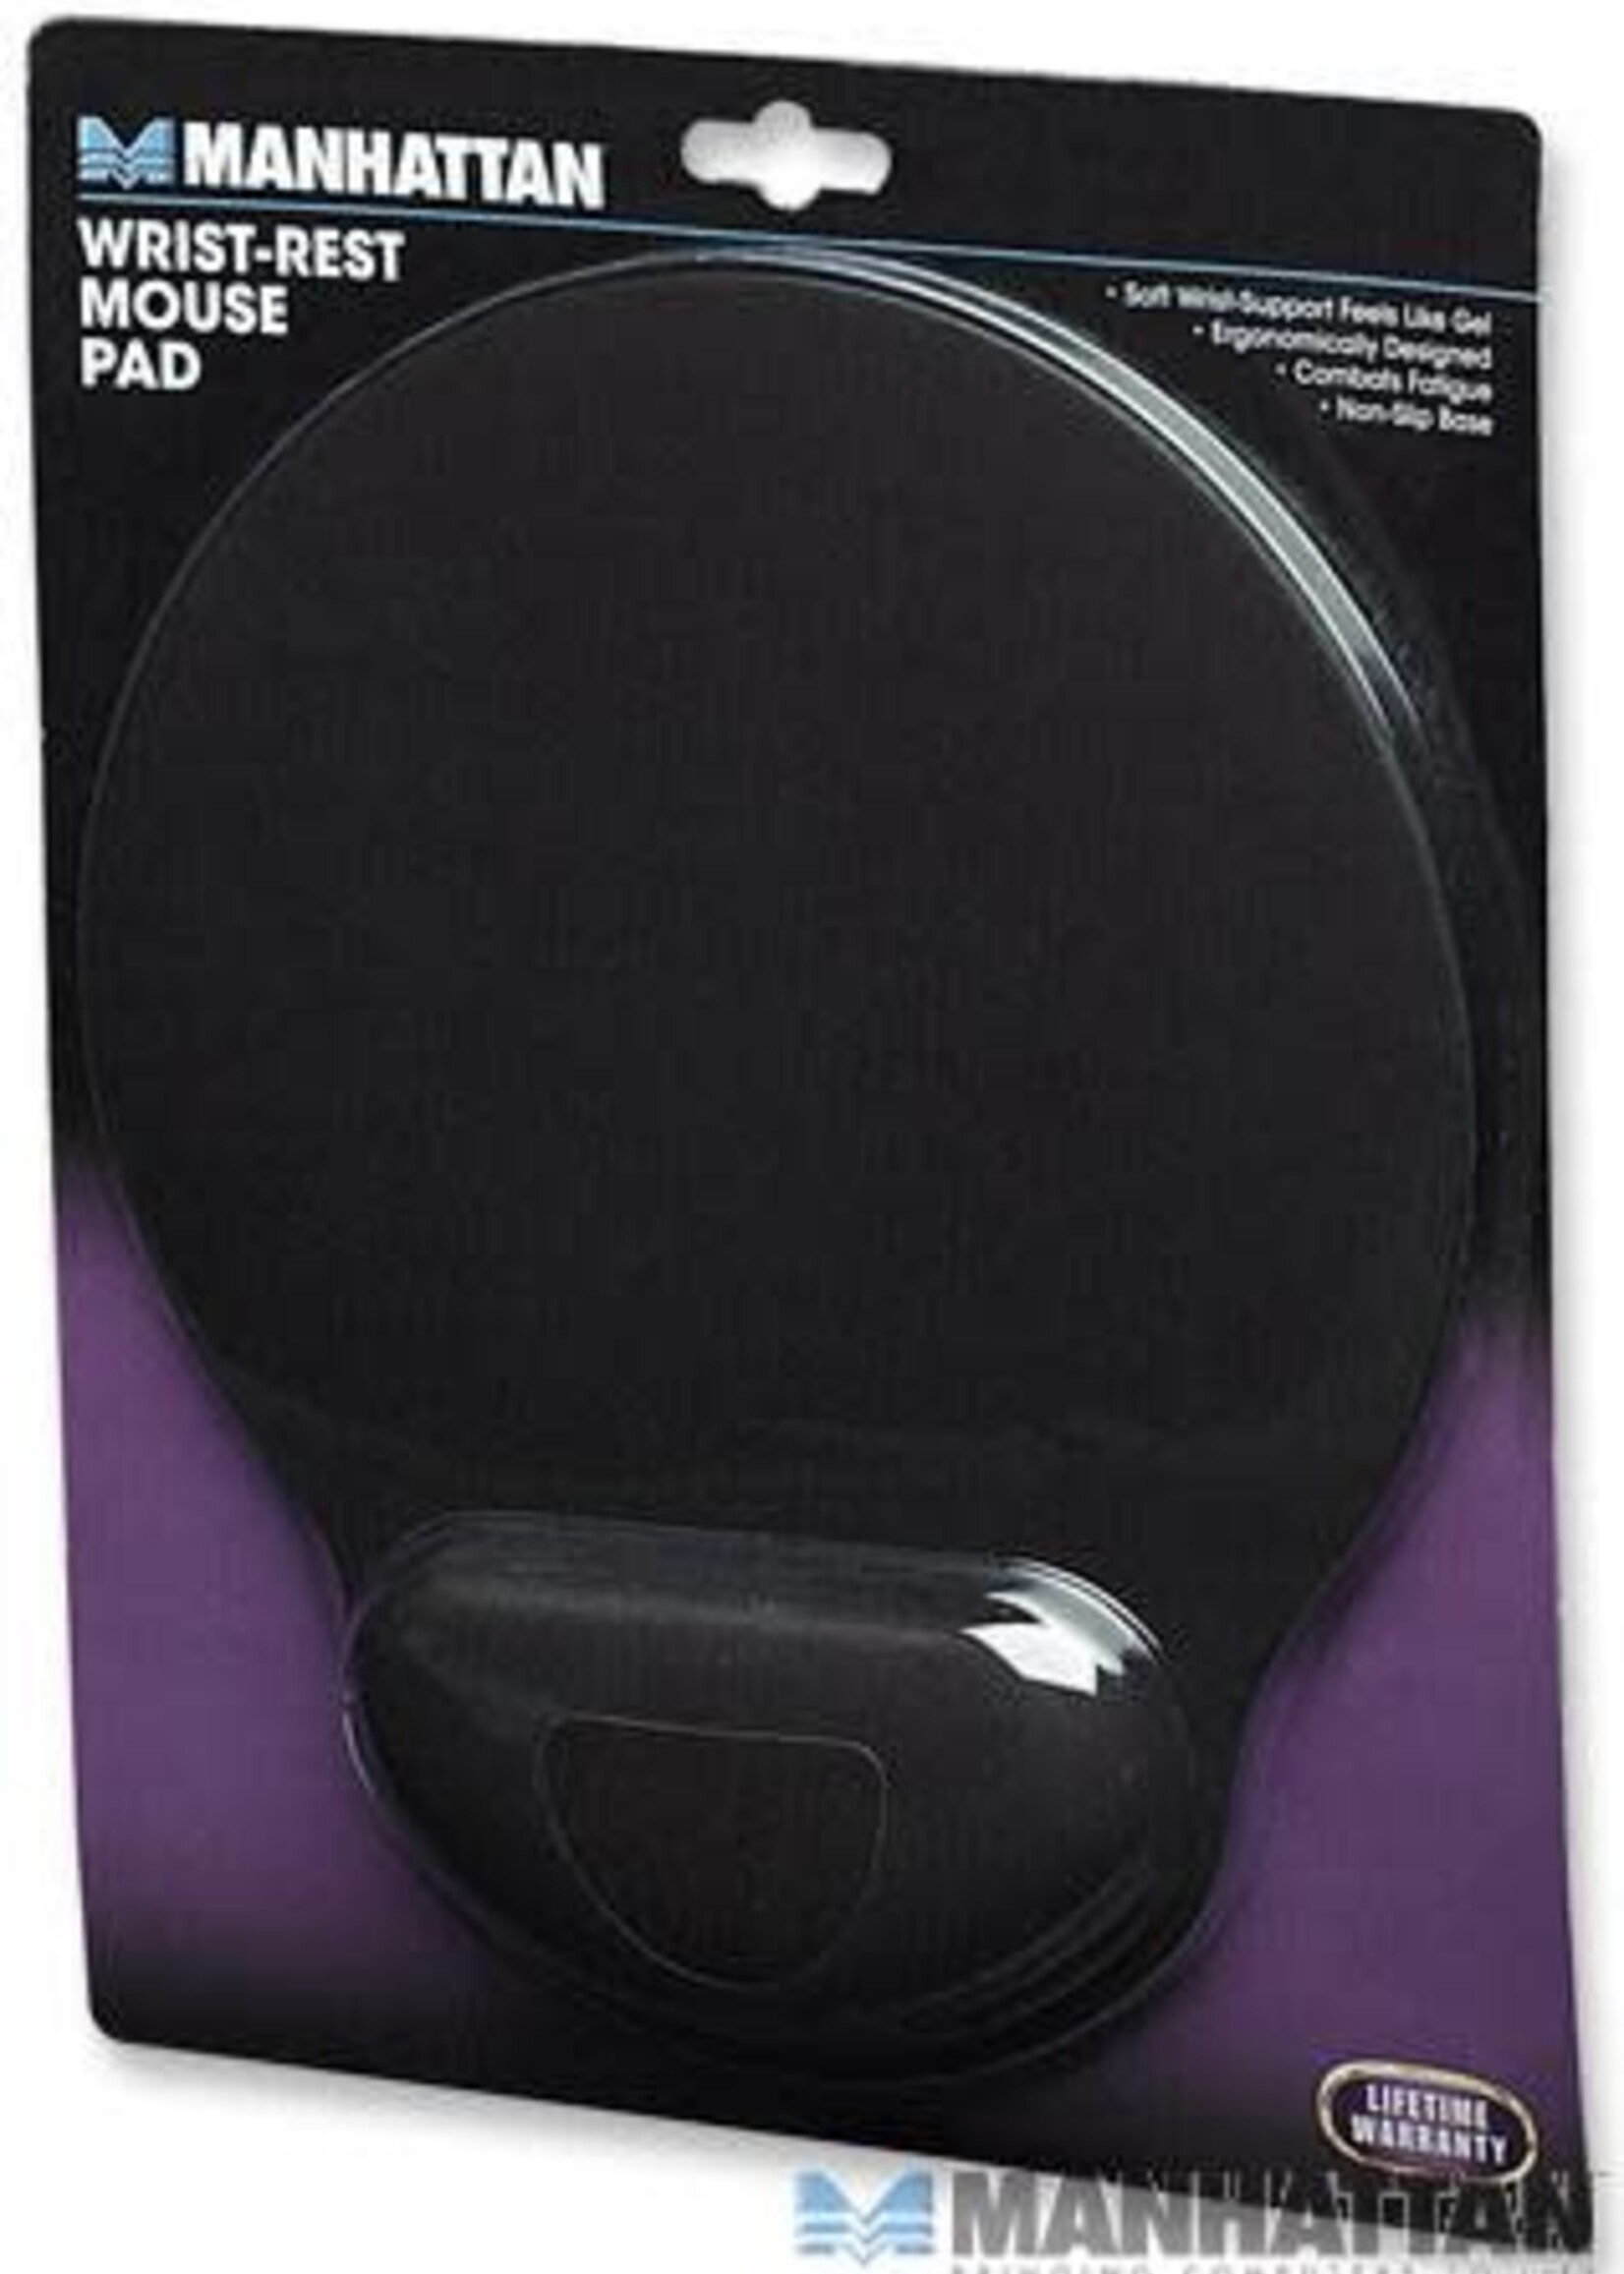 Manhattan Wrist-Rest Mouse Pad Black